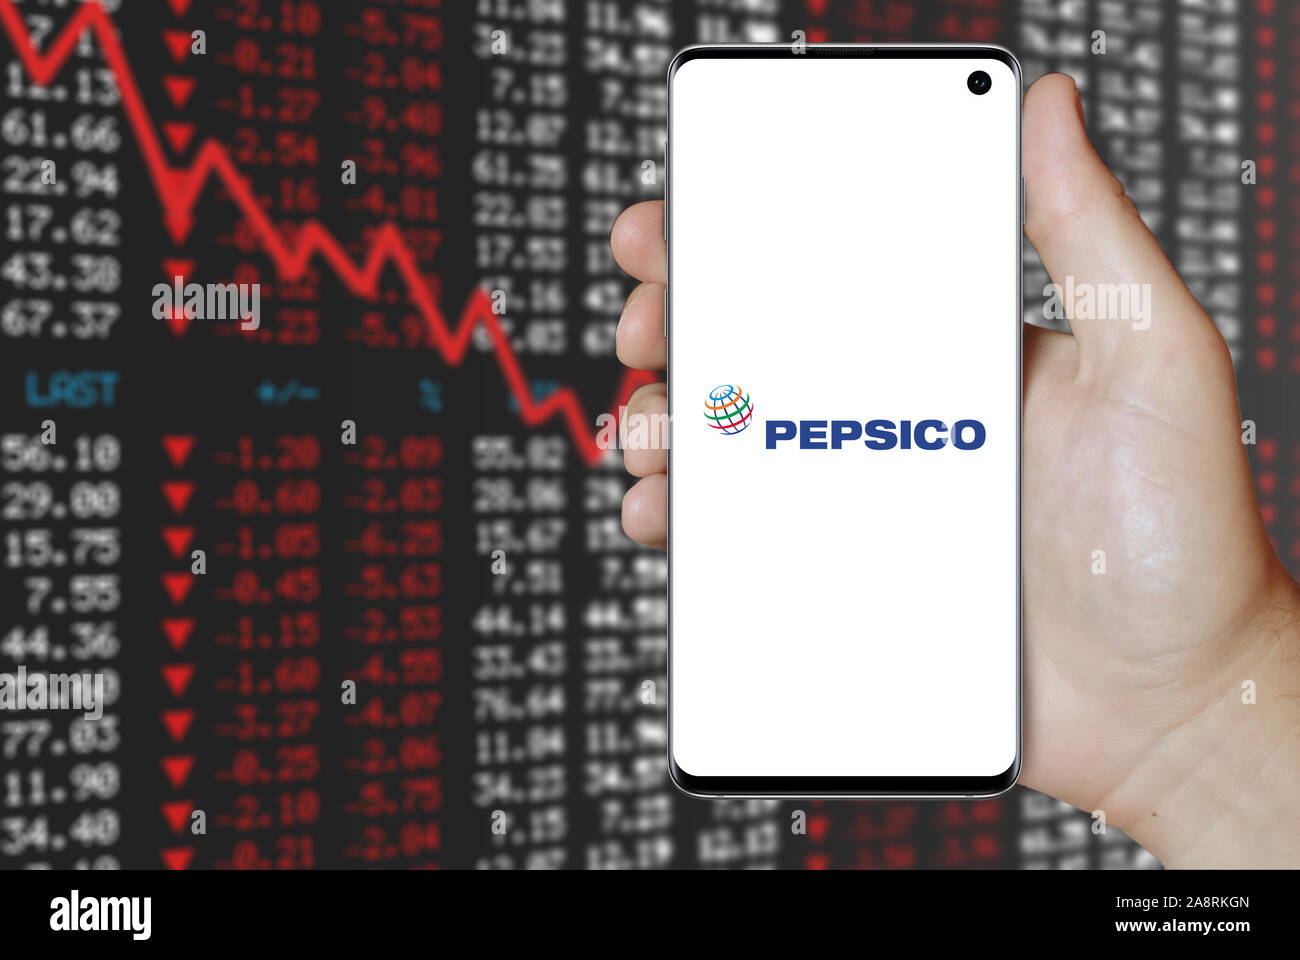 Logo of public company PepsiCo Inc. displayed on a smartphone. Negative stock market background. Credit: PIXDUCE Stock Photo